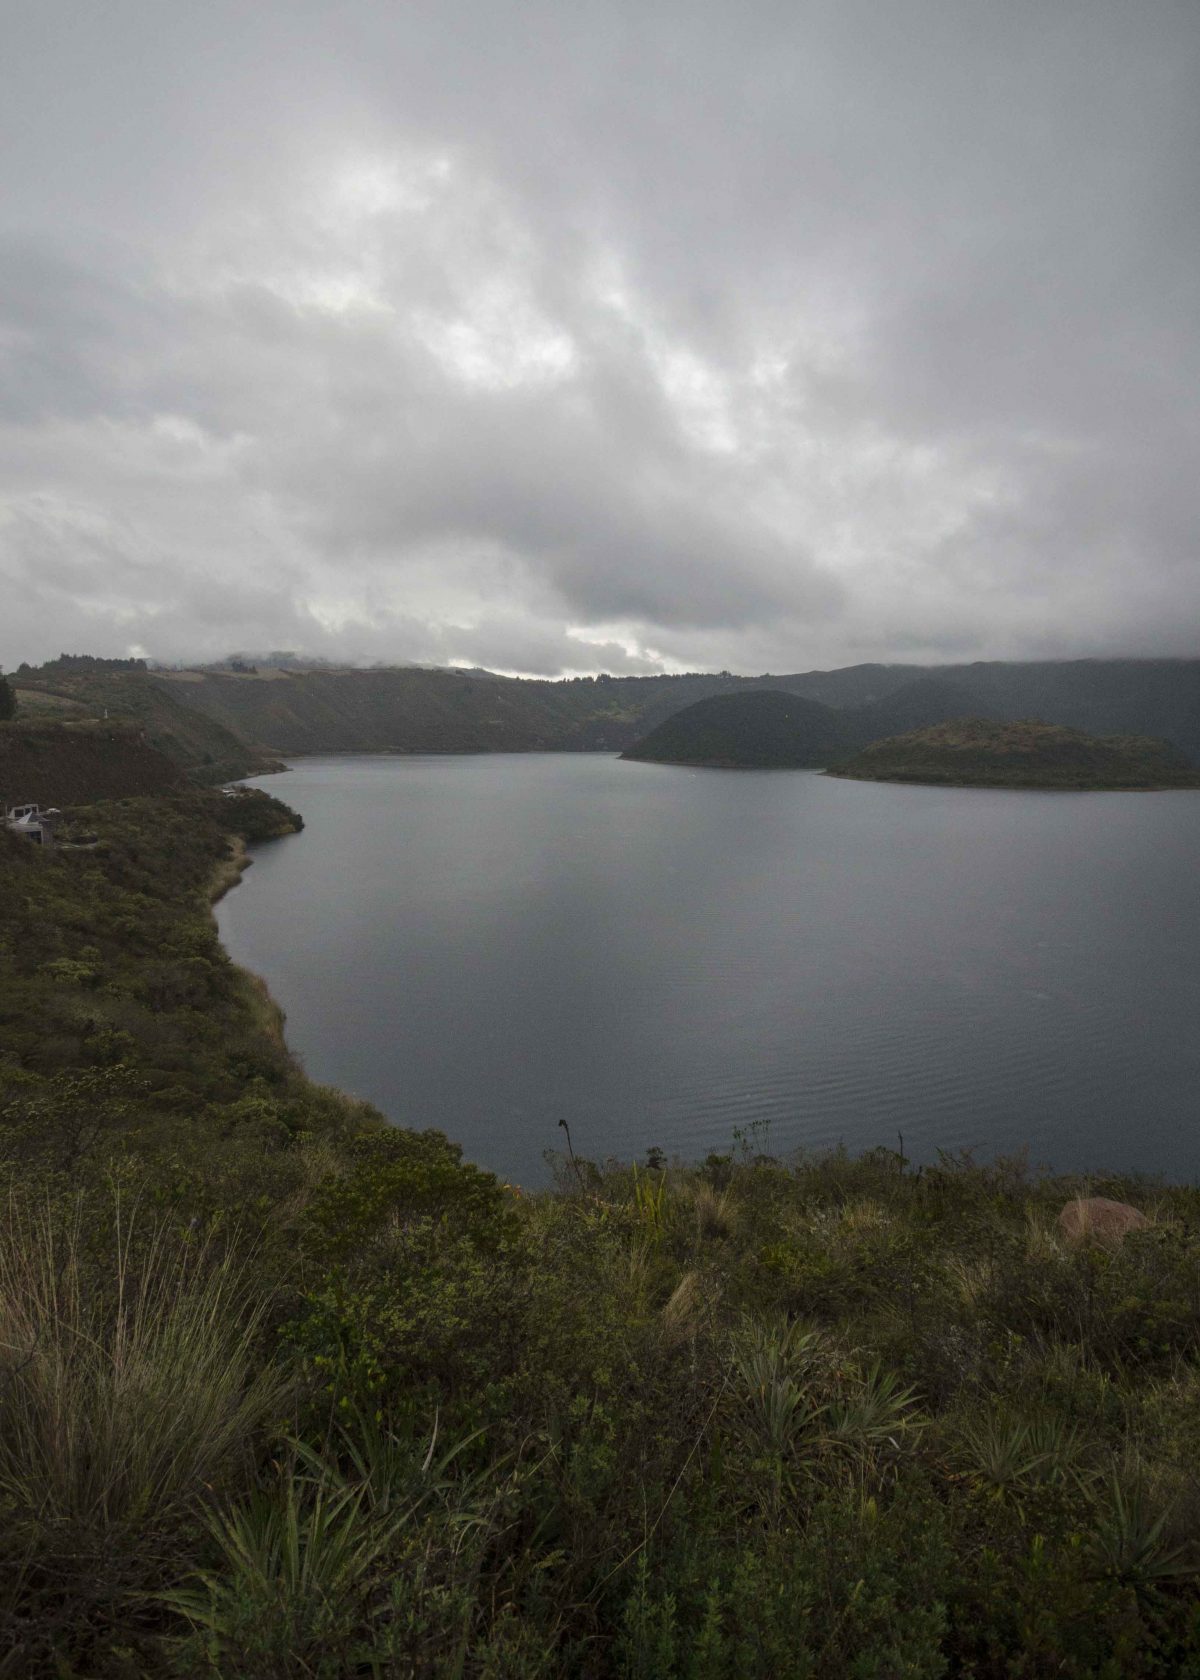 Rain is an everyday threat in the Andes, Laguna Cuicocha, Ecuador